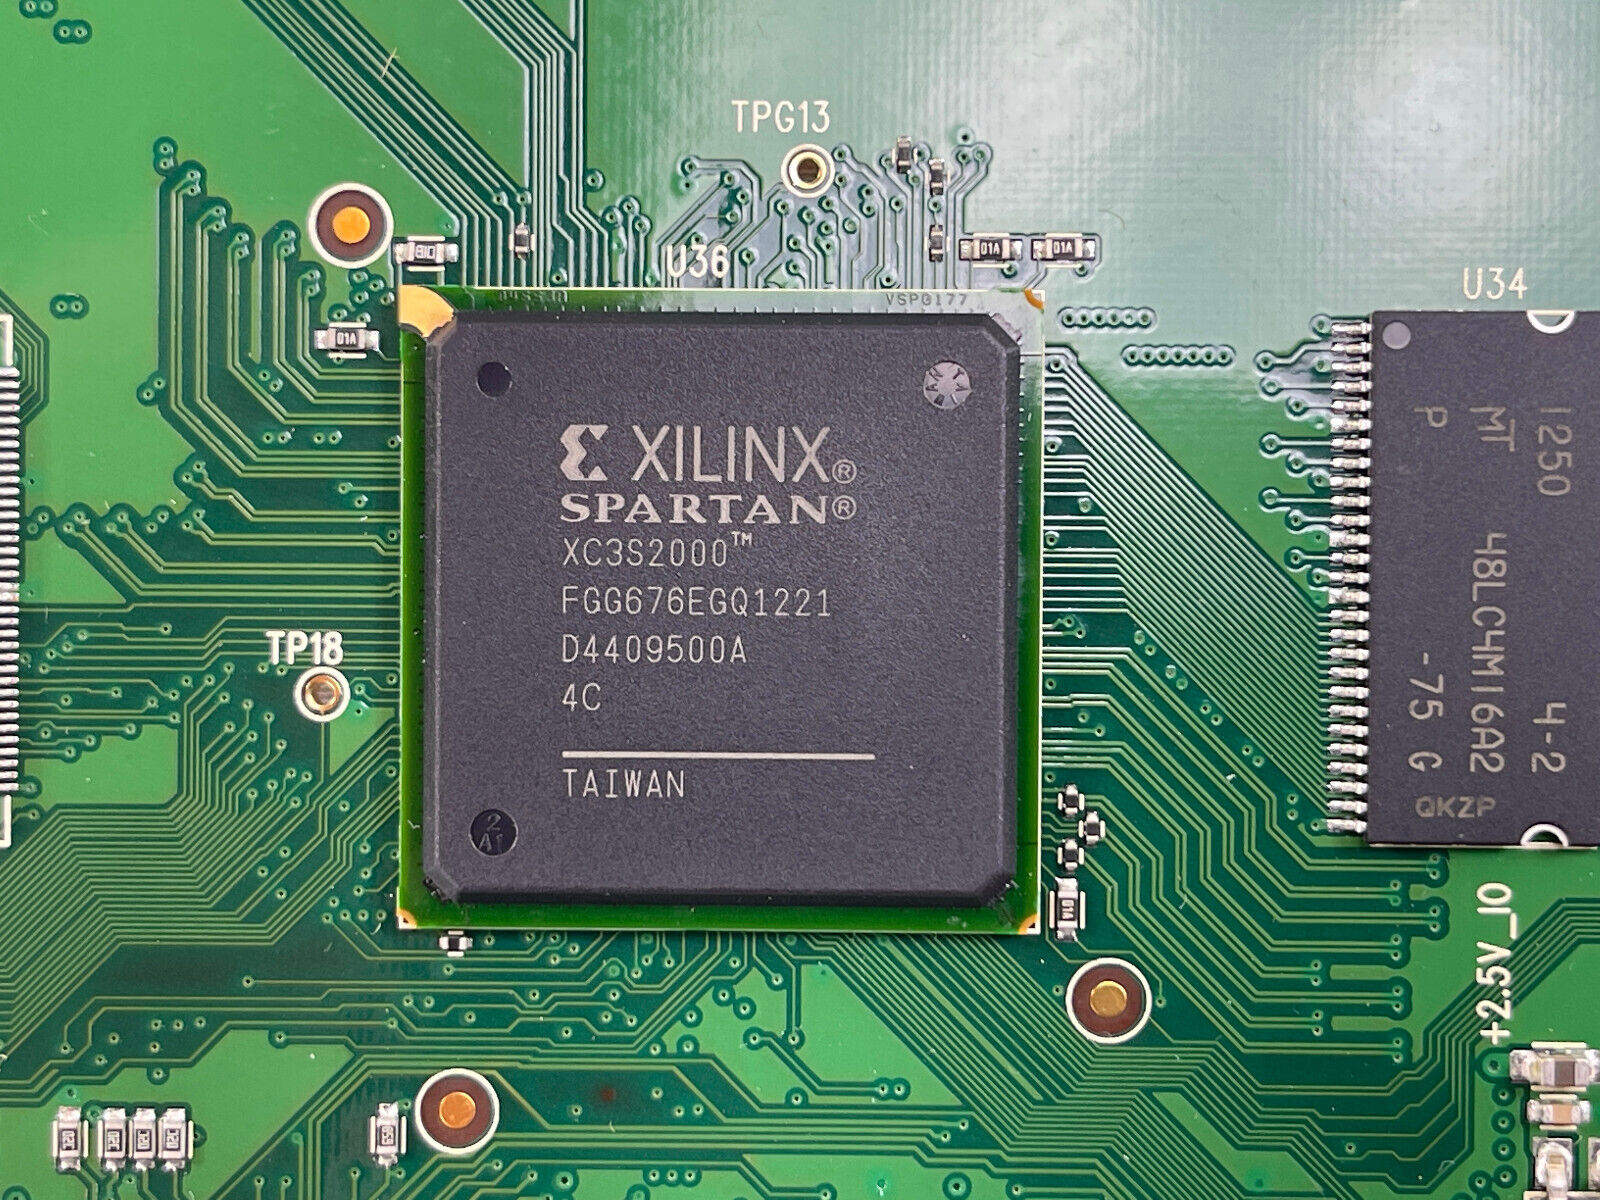 Evertz XE-IP32HX 32x HD/SD SDI BNC Input Module for Xenon Multi-Format Routers.